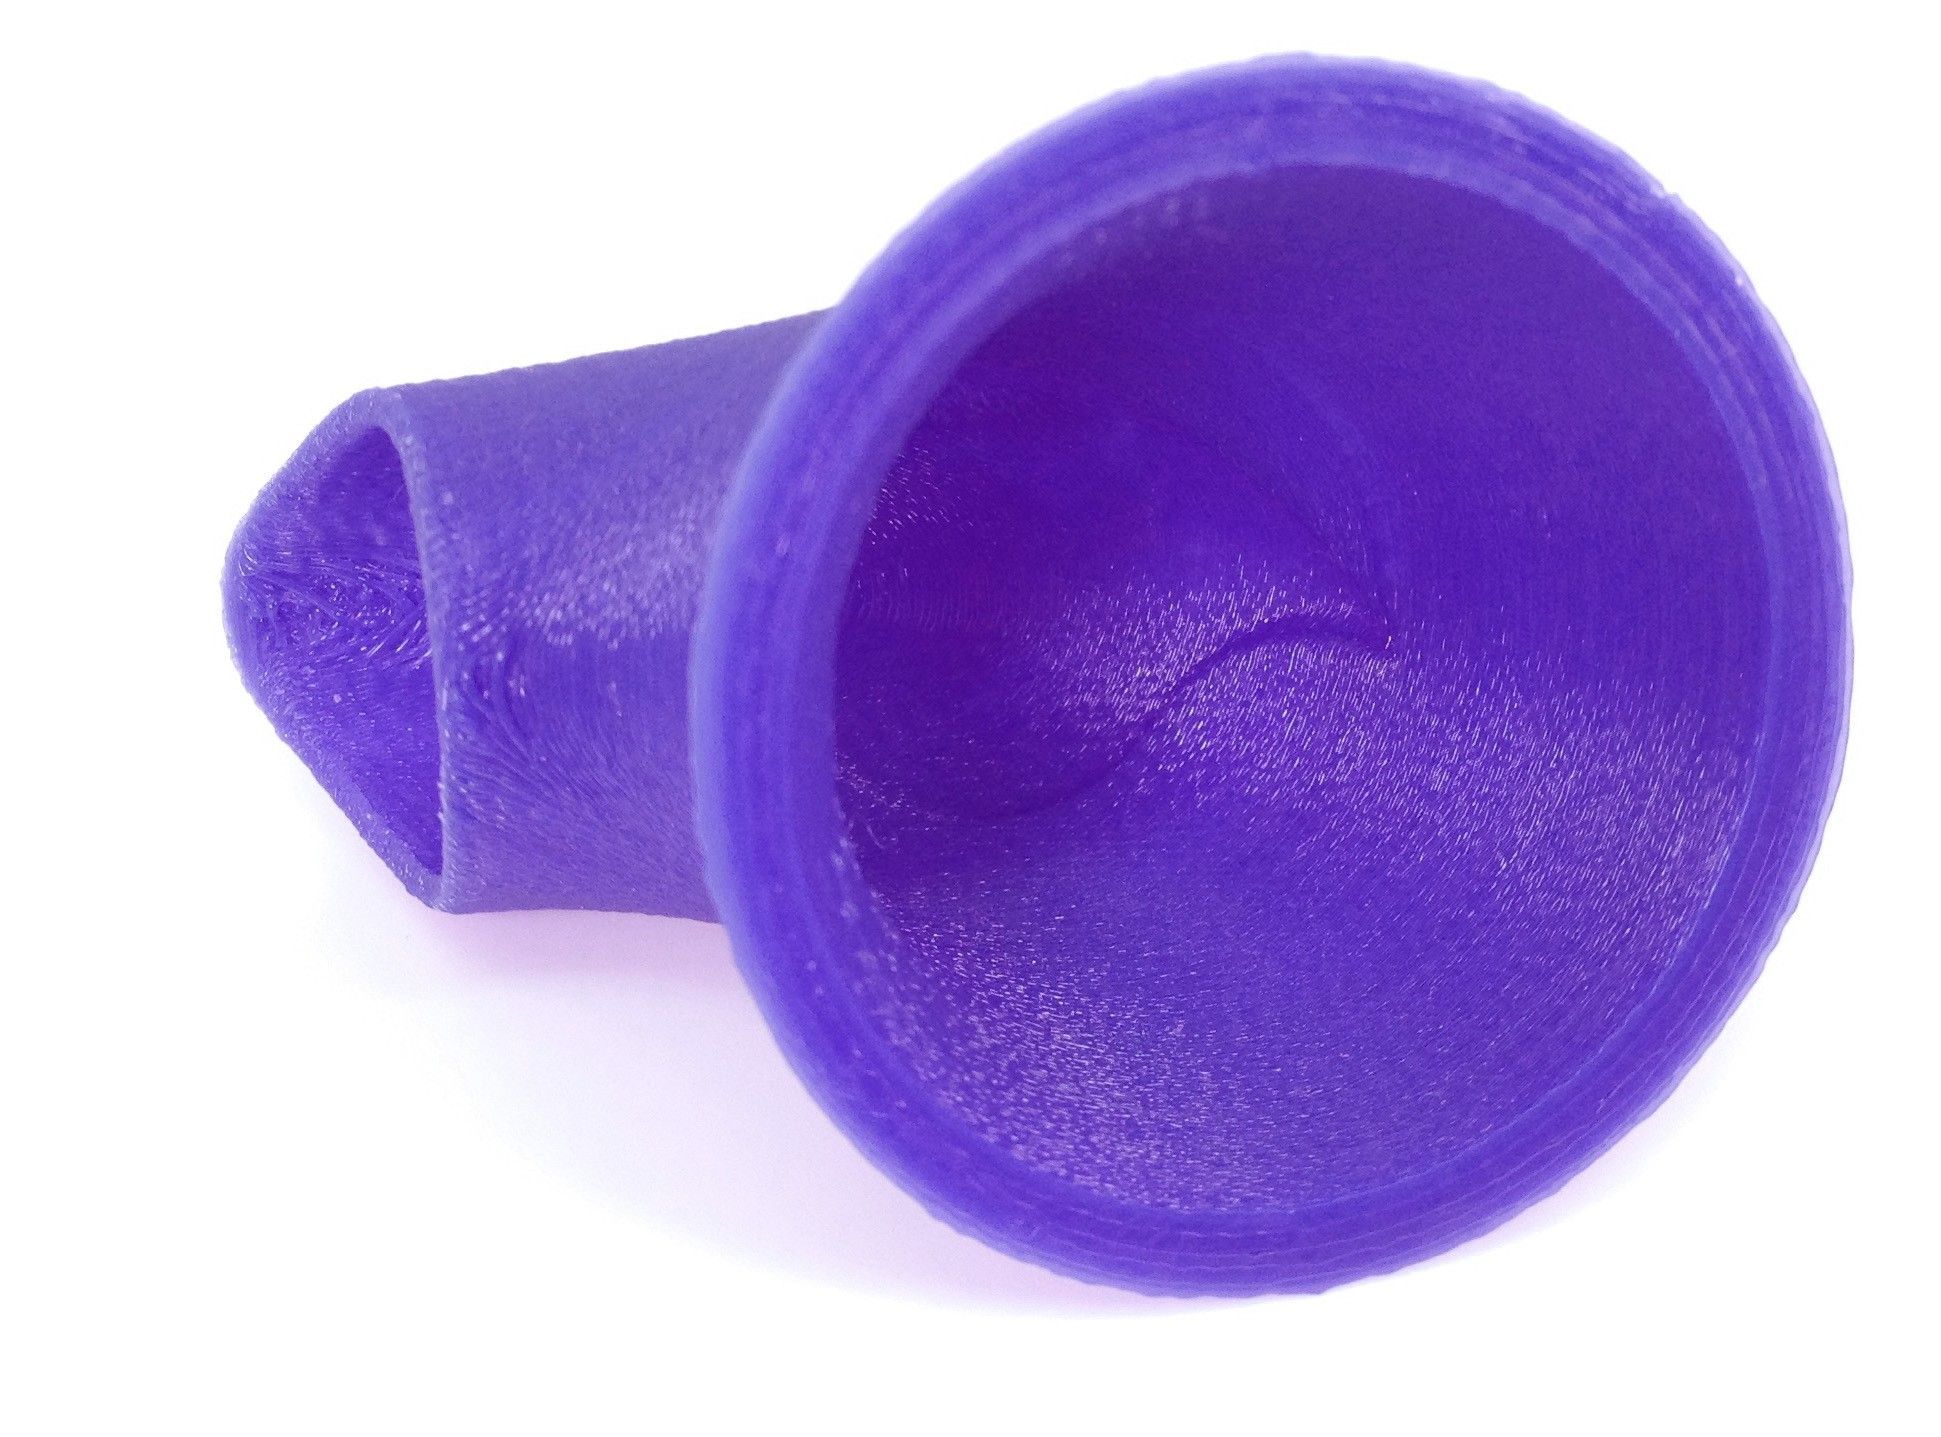 3.jpg Download free STL file Water Saving Kitchen Tap Spout • Design to 3D print, Mirthin